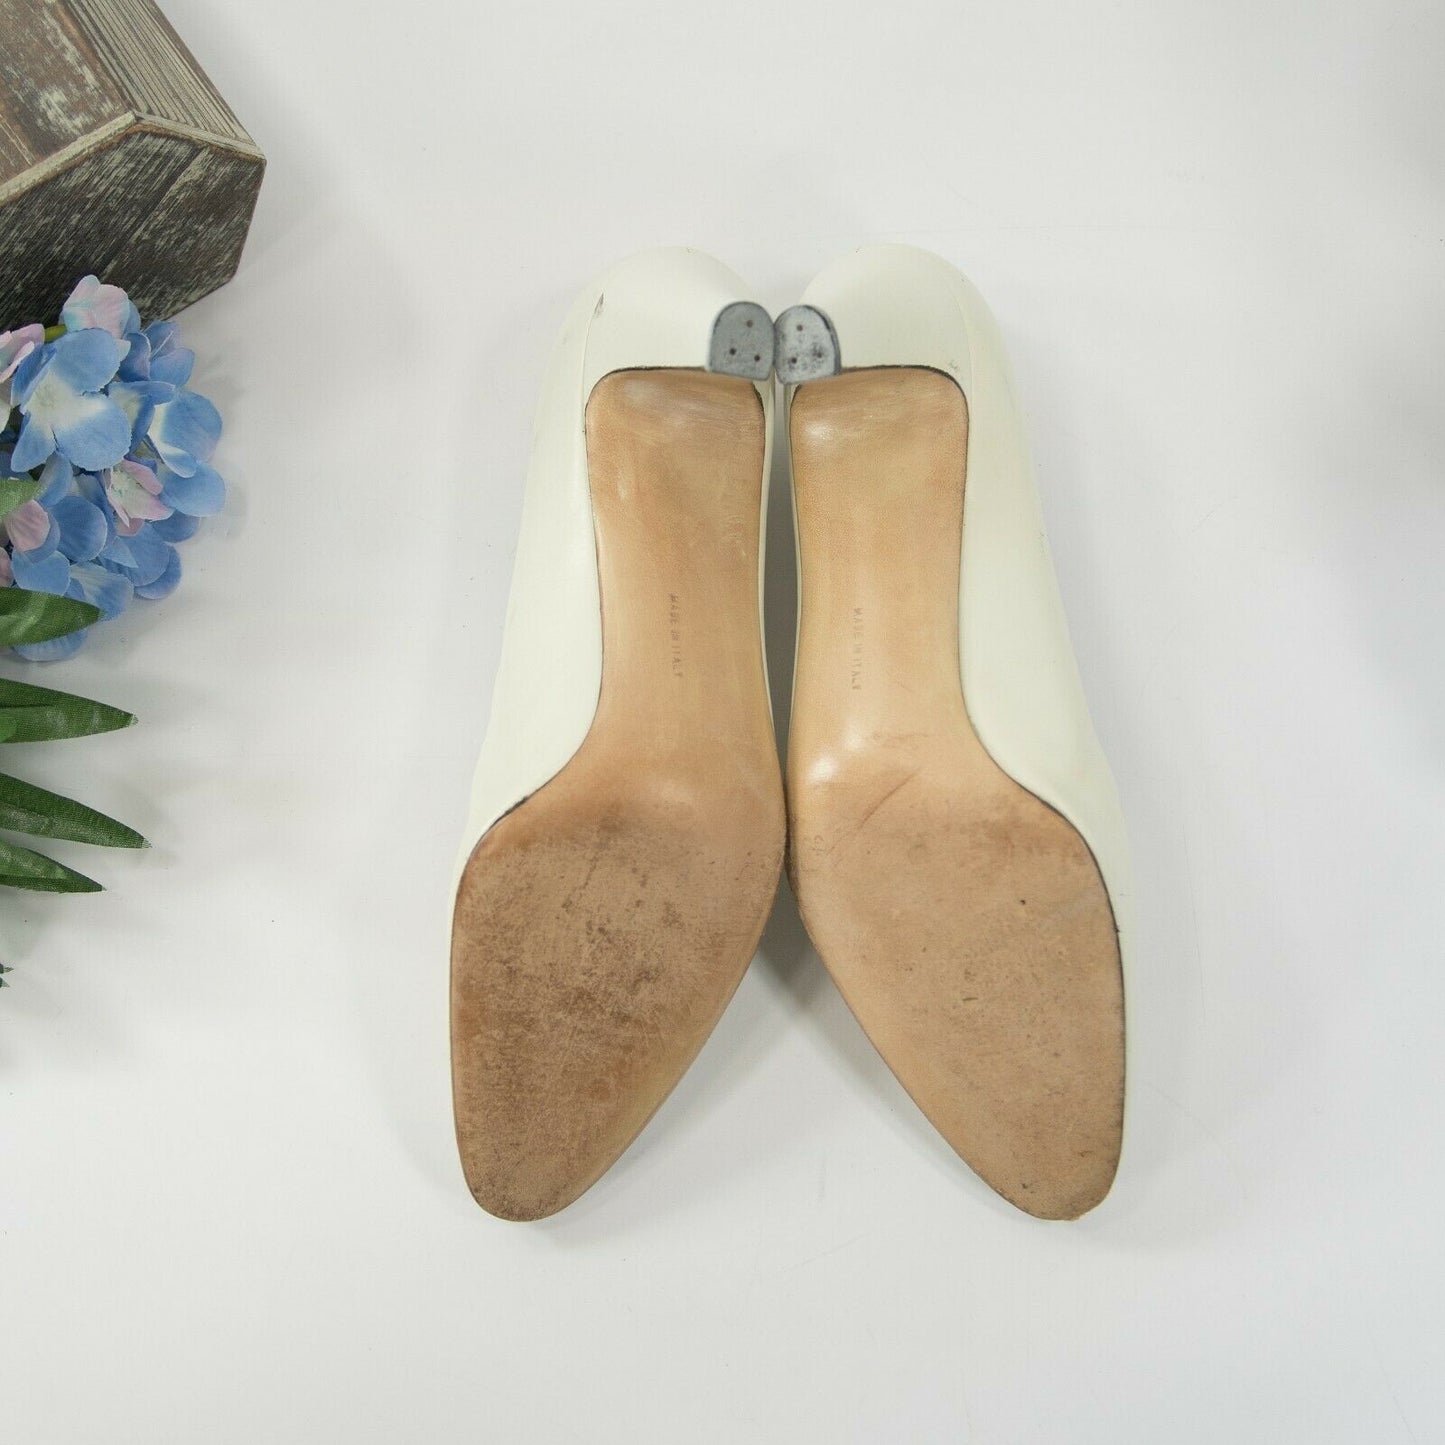 Salvatore Ferragamo Cream Nude Leather Shoes Heels 8 Narrow